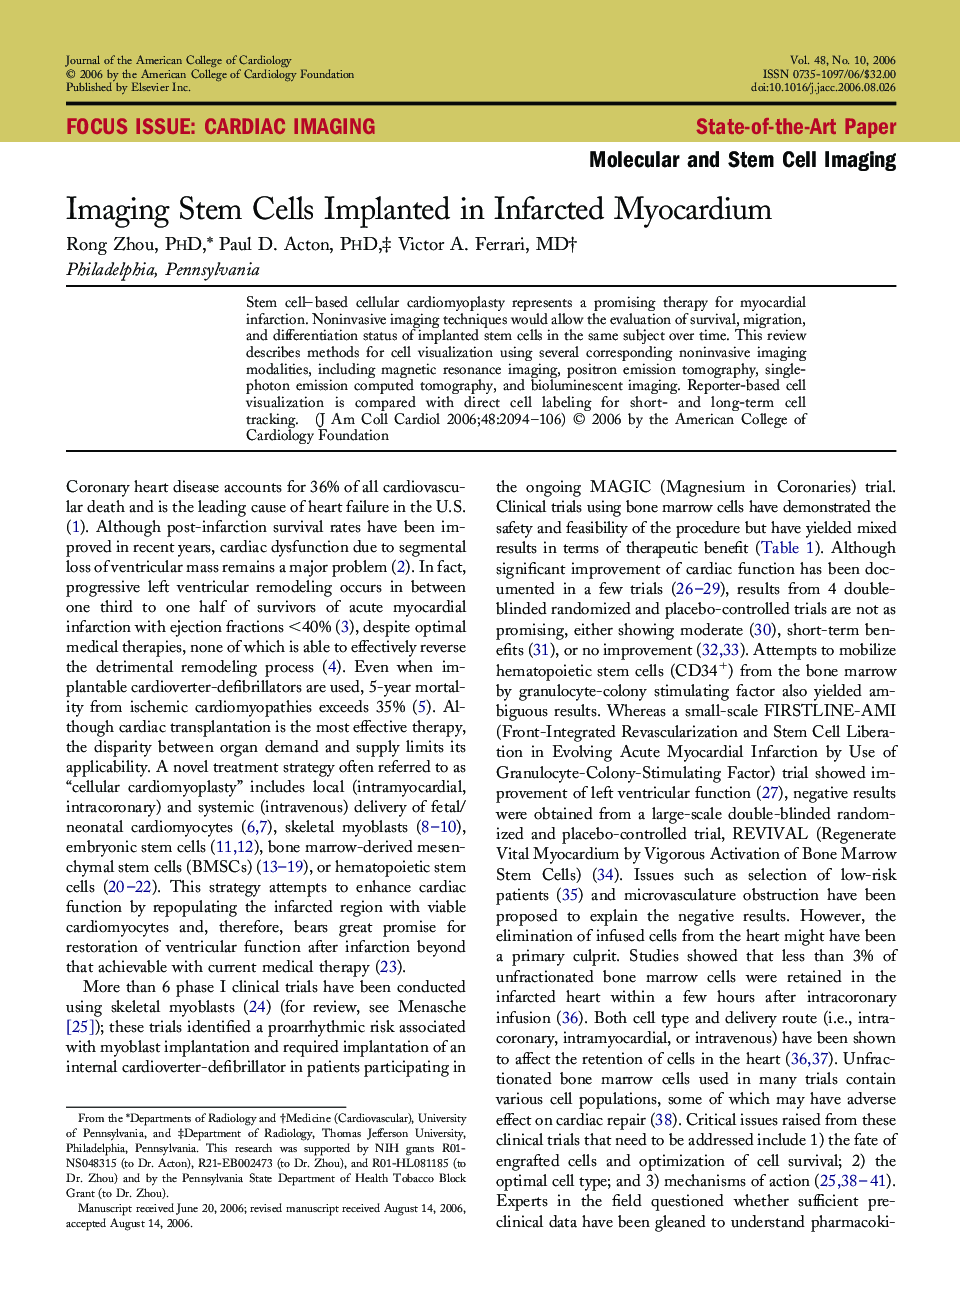 Imaging Stem Cells Implanted in Infarcted Myocardium 